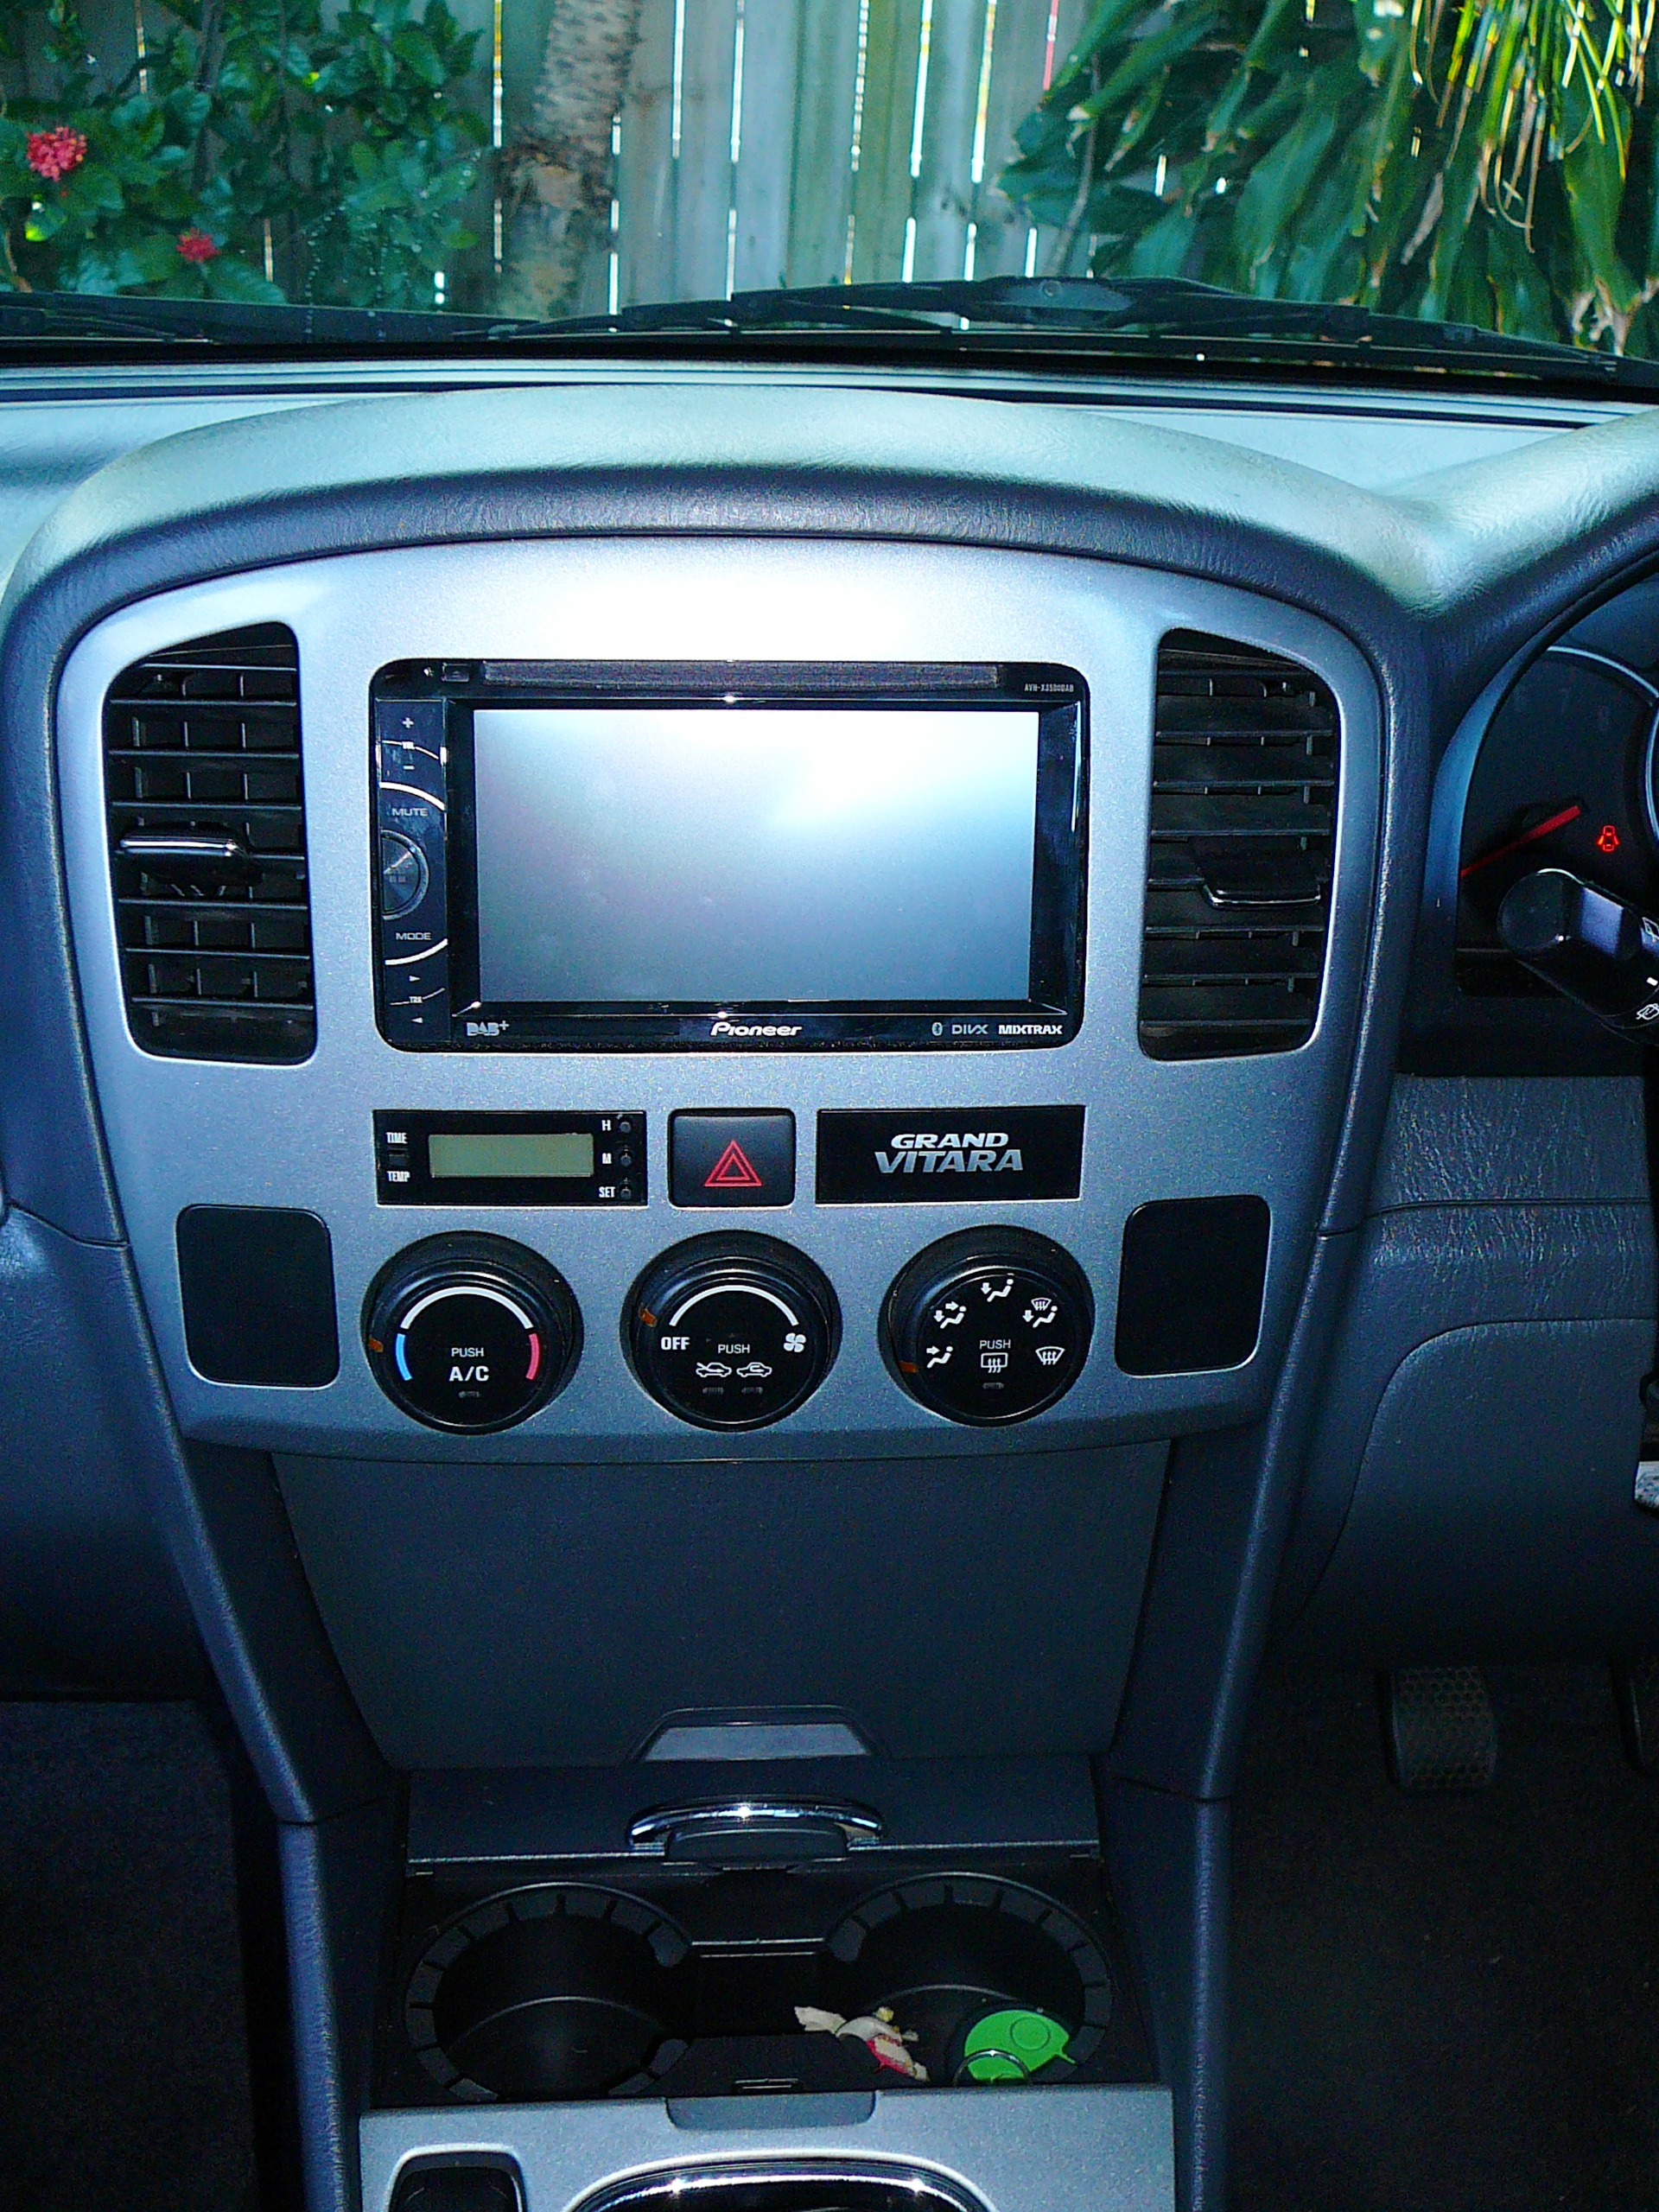 Suzuki Vitara 2005, Pioneer AVH-X3500DAB Audio Visual Unit Installation